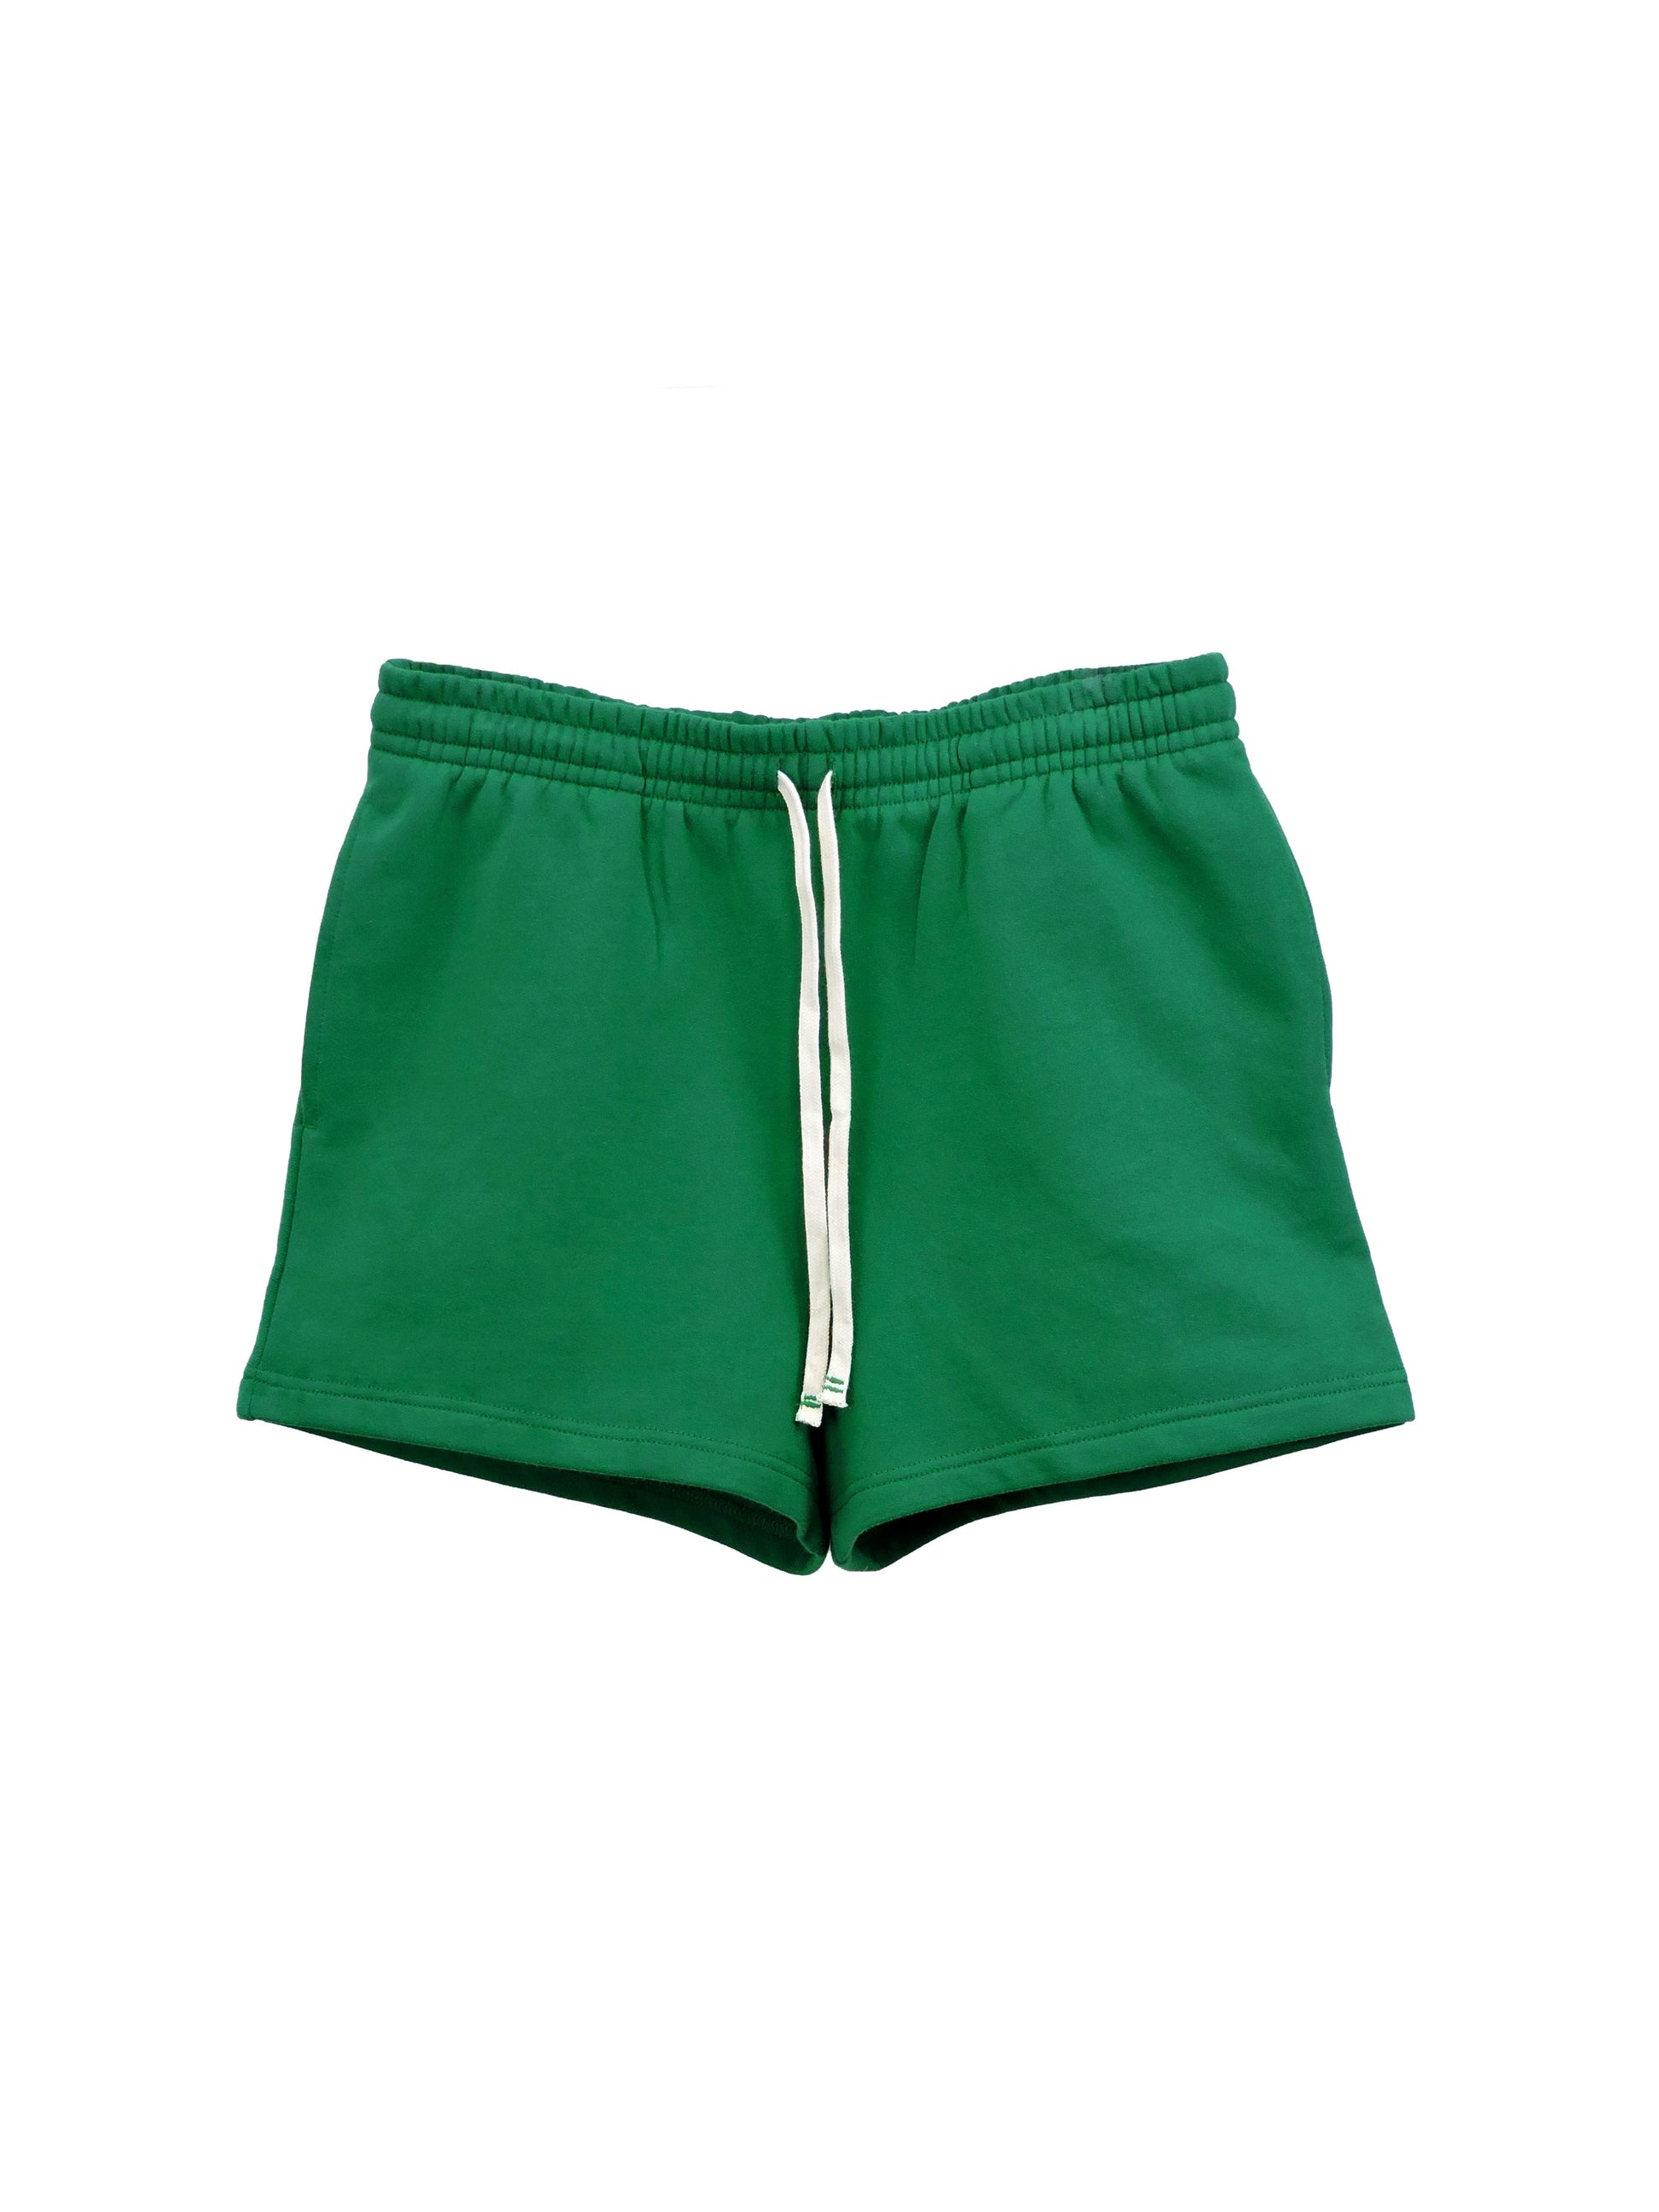 Mini Green Fleece Shorts with Long White Drawstrings.